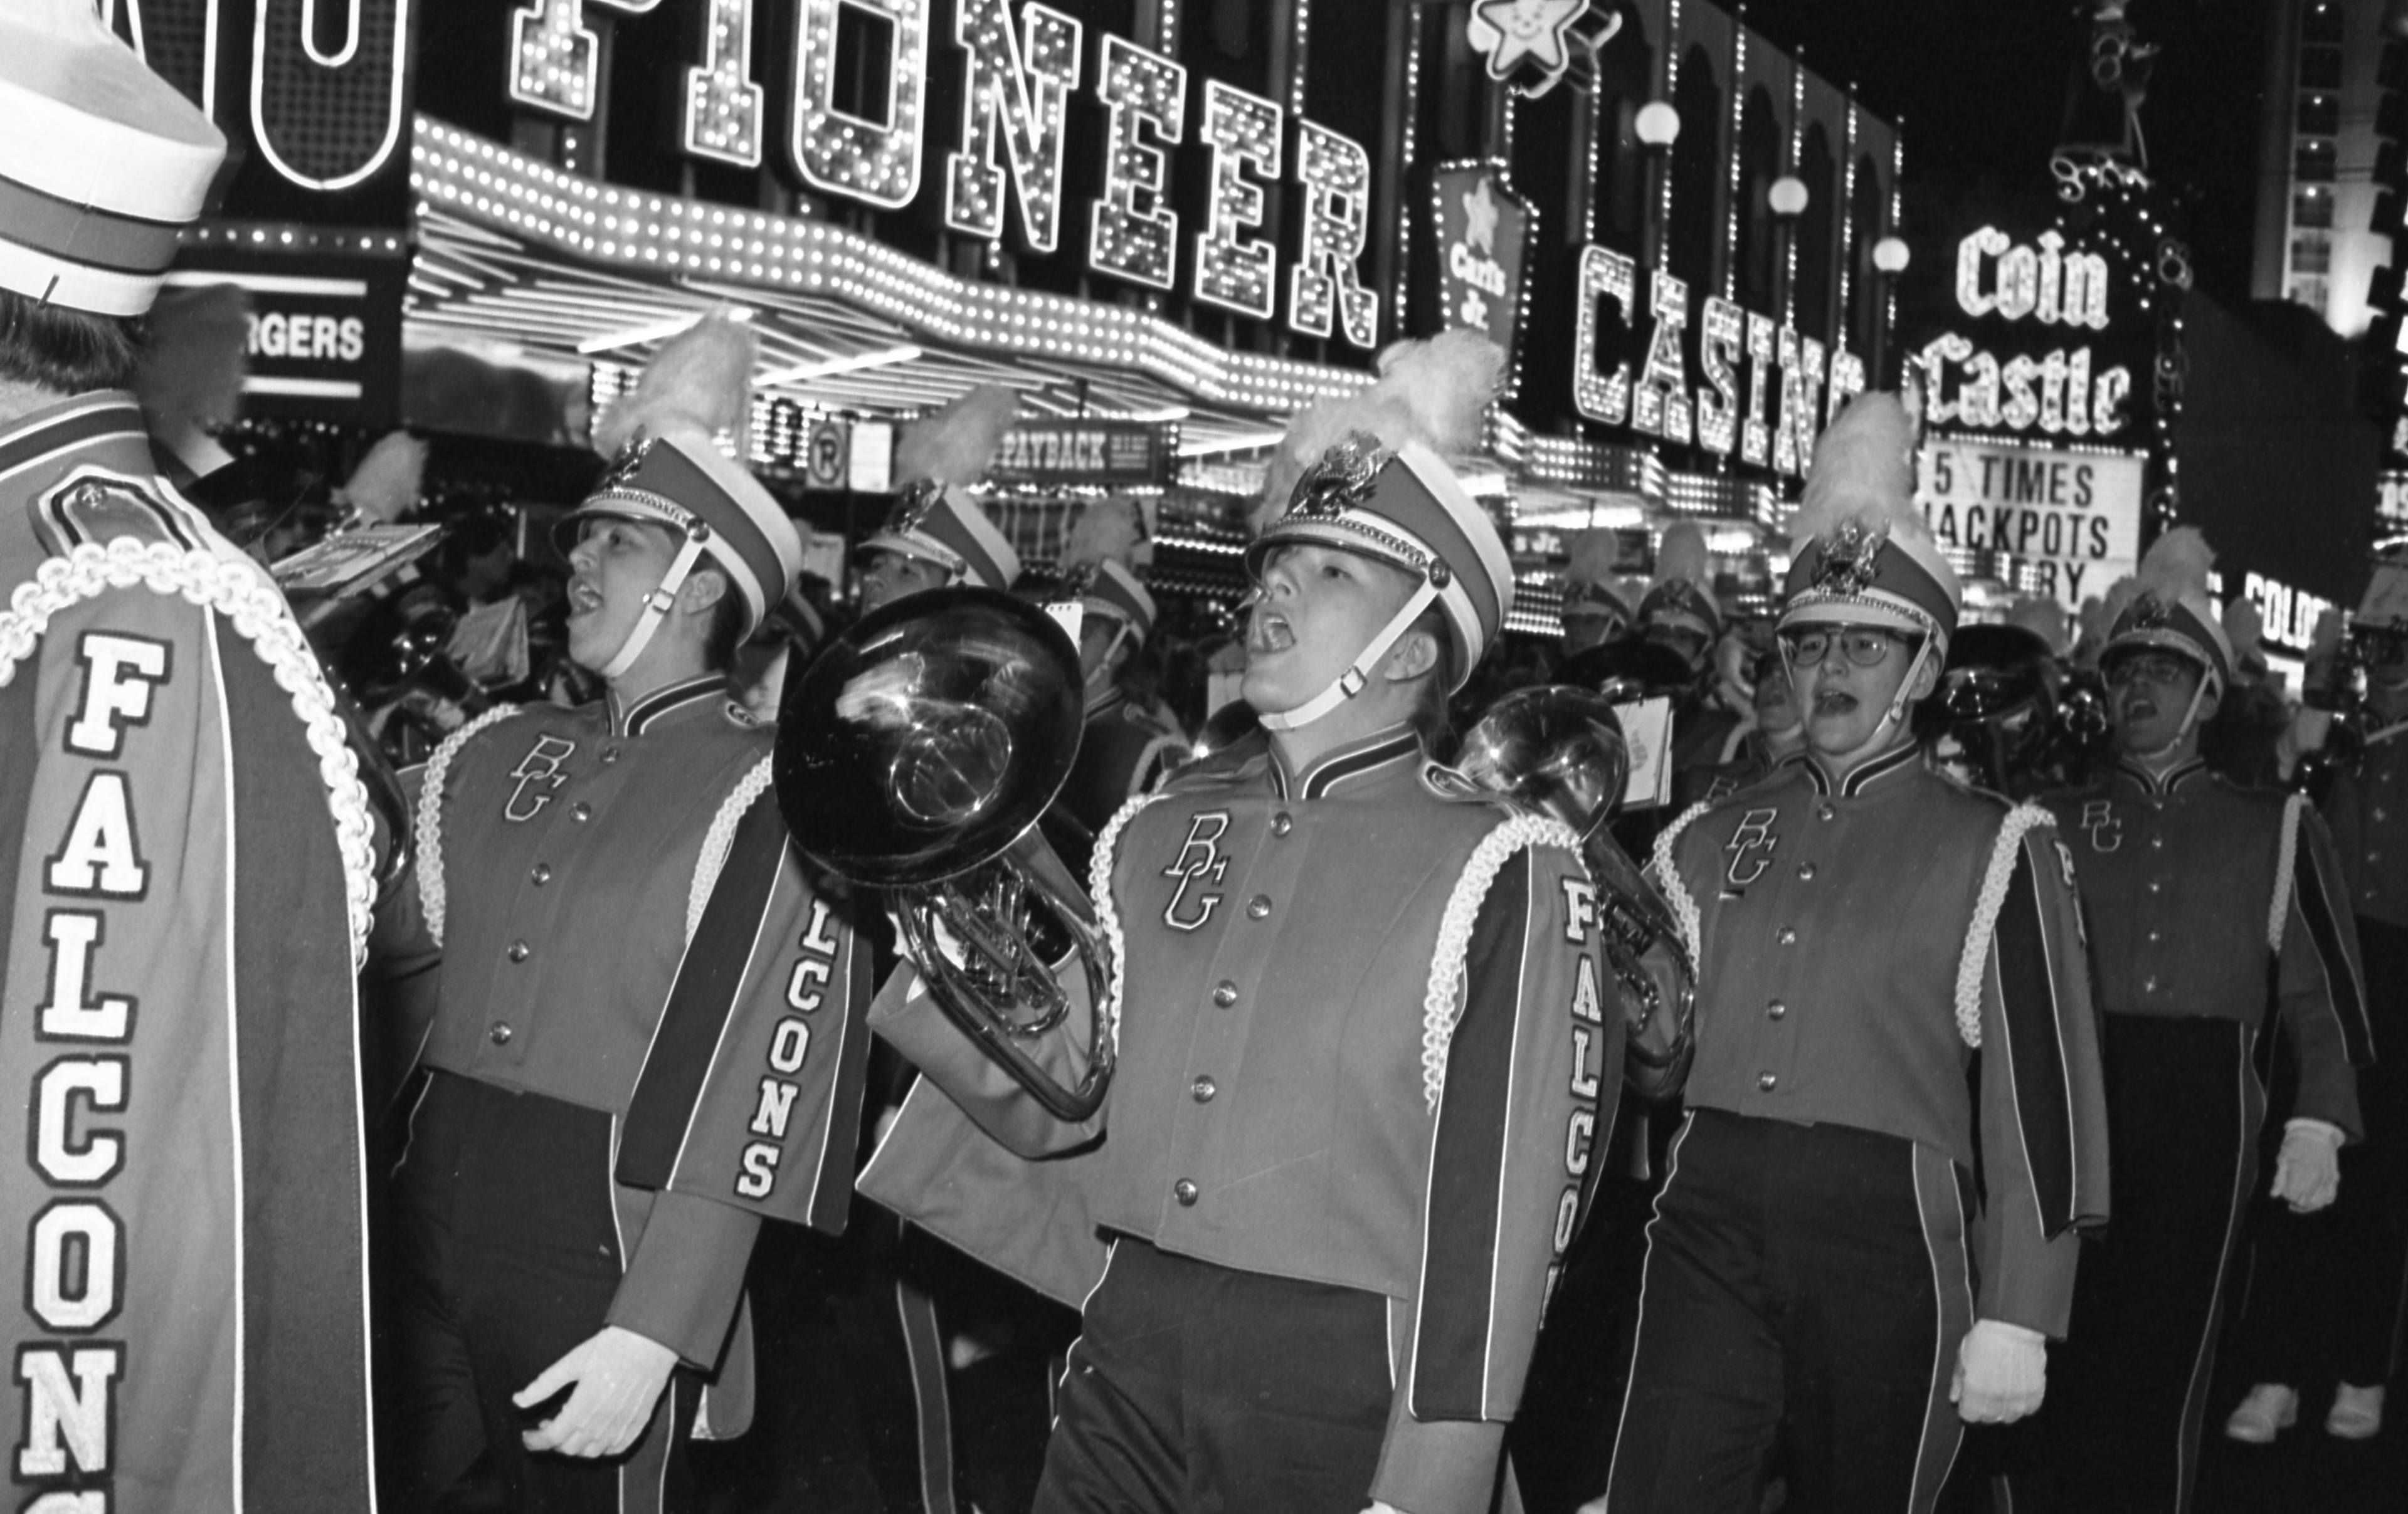 Band members marching in the Las Vegas strip in 1992 